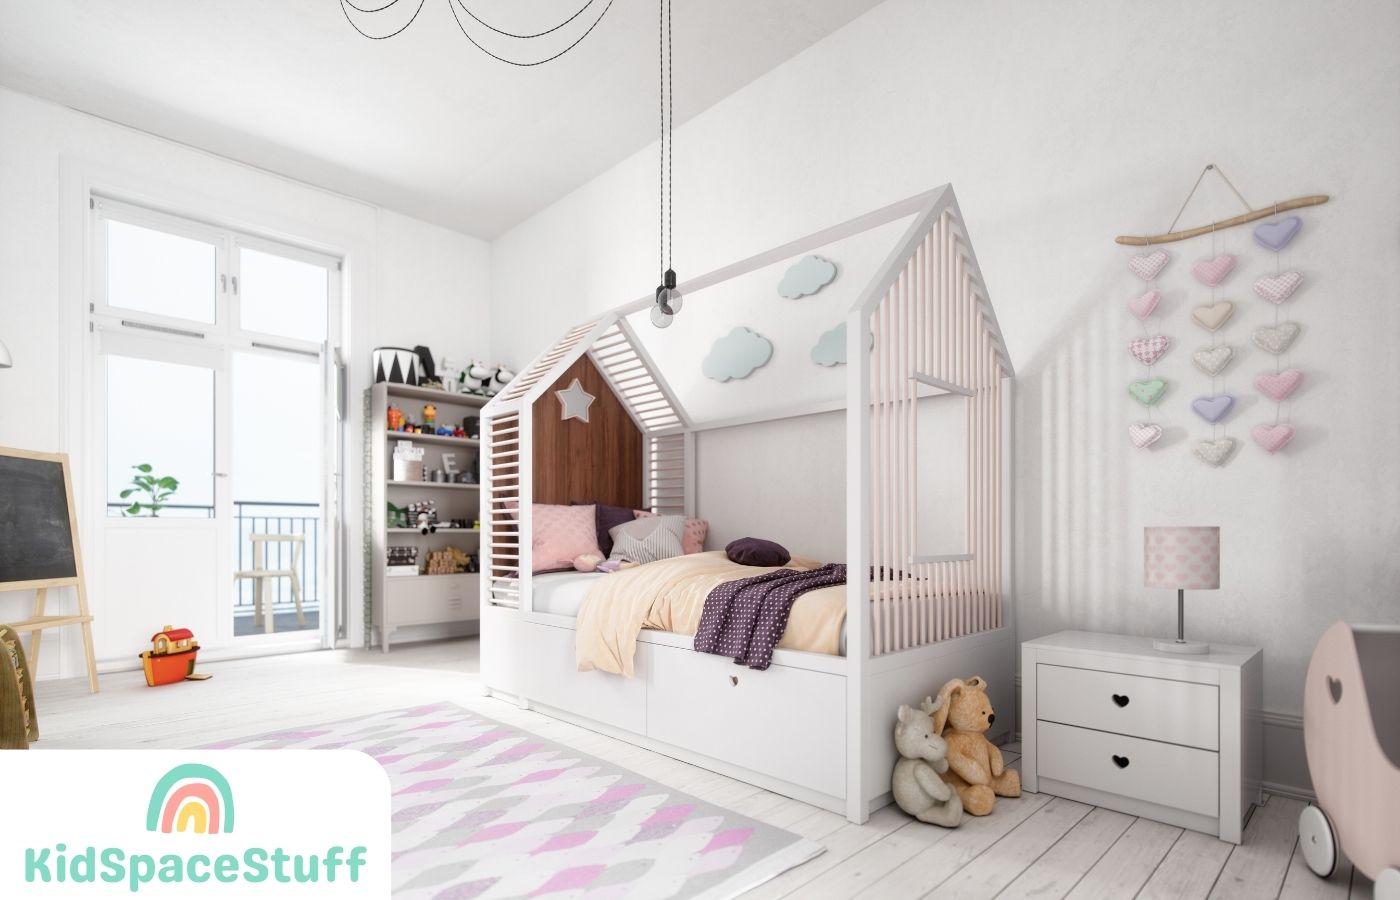 No Closet Kids Bedroom Room Ideas (That Work!)